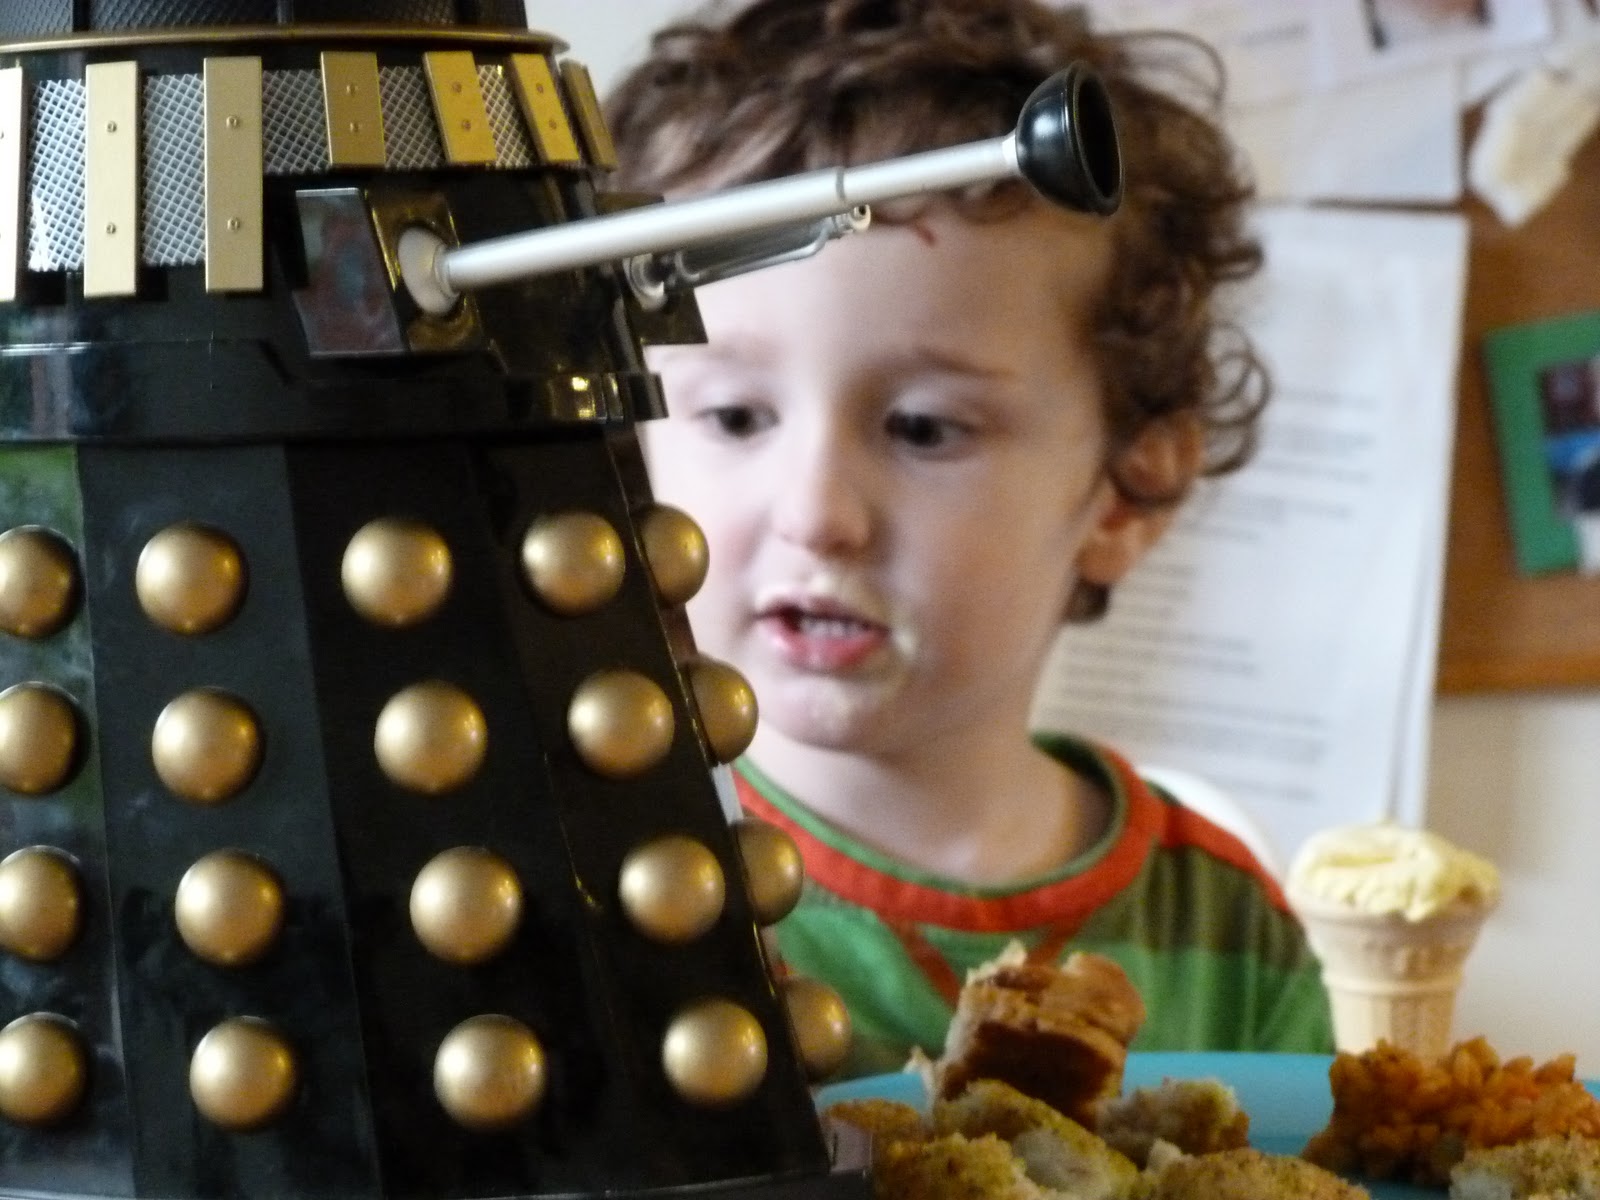 Messy toddler talks to a Dalek